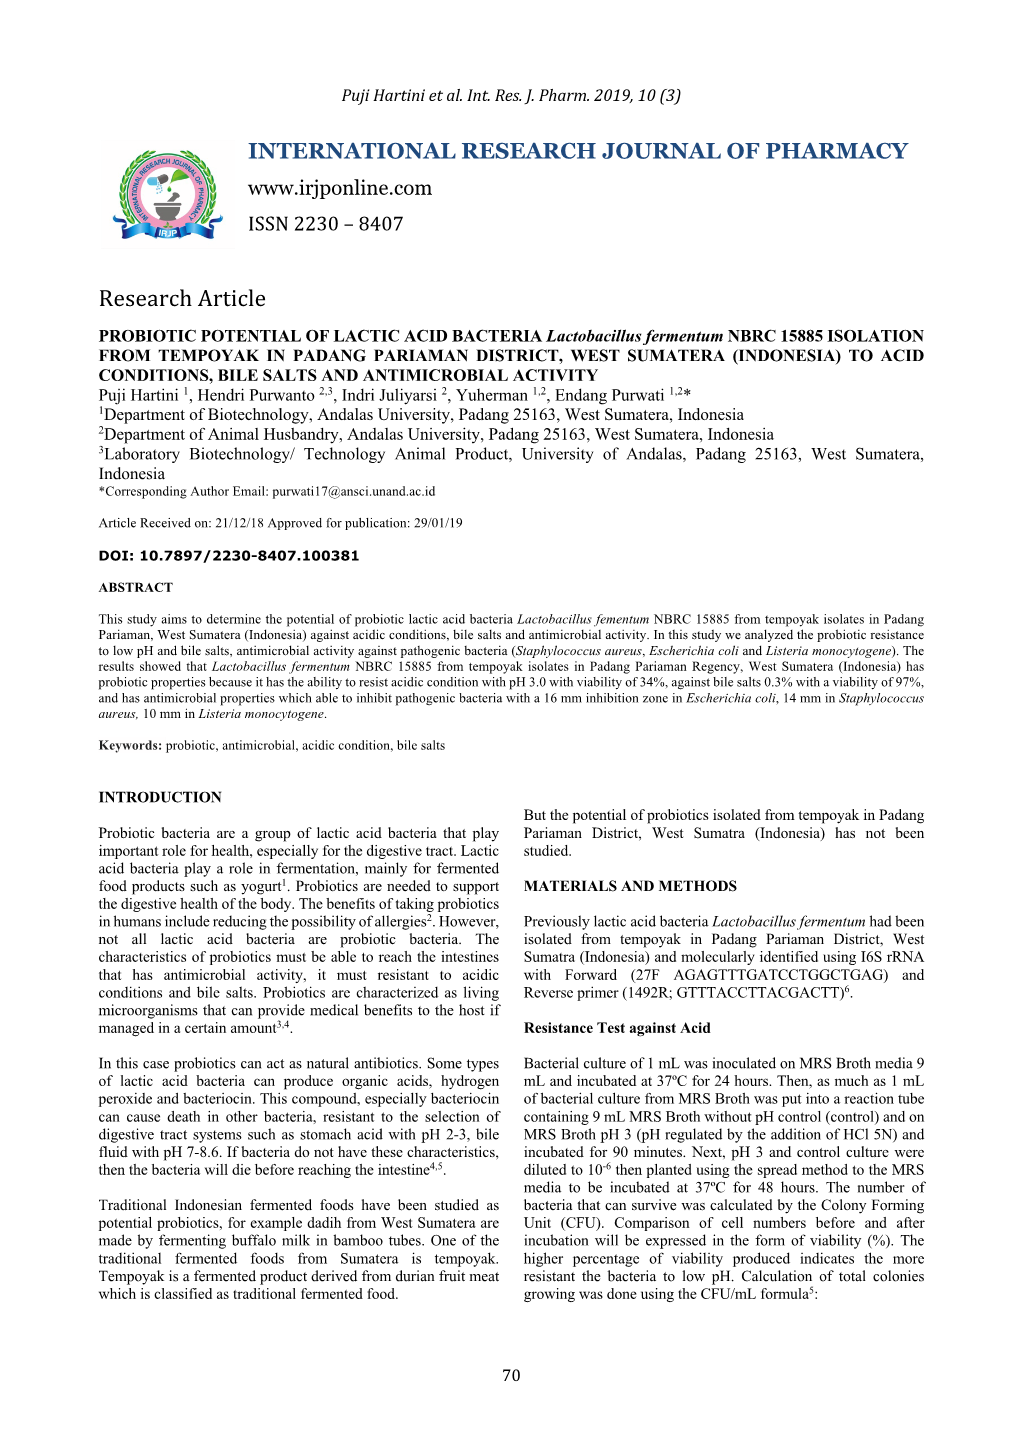 PROBIOTIC POTENTIAL of LACTIC ACID BACTERIA Lactobacillus Fermentum NBRC 15885 ISOLATION from TEMPOYAK in PADANG PARIAMAN